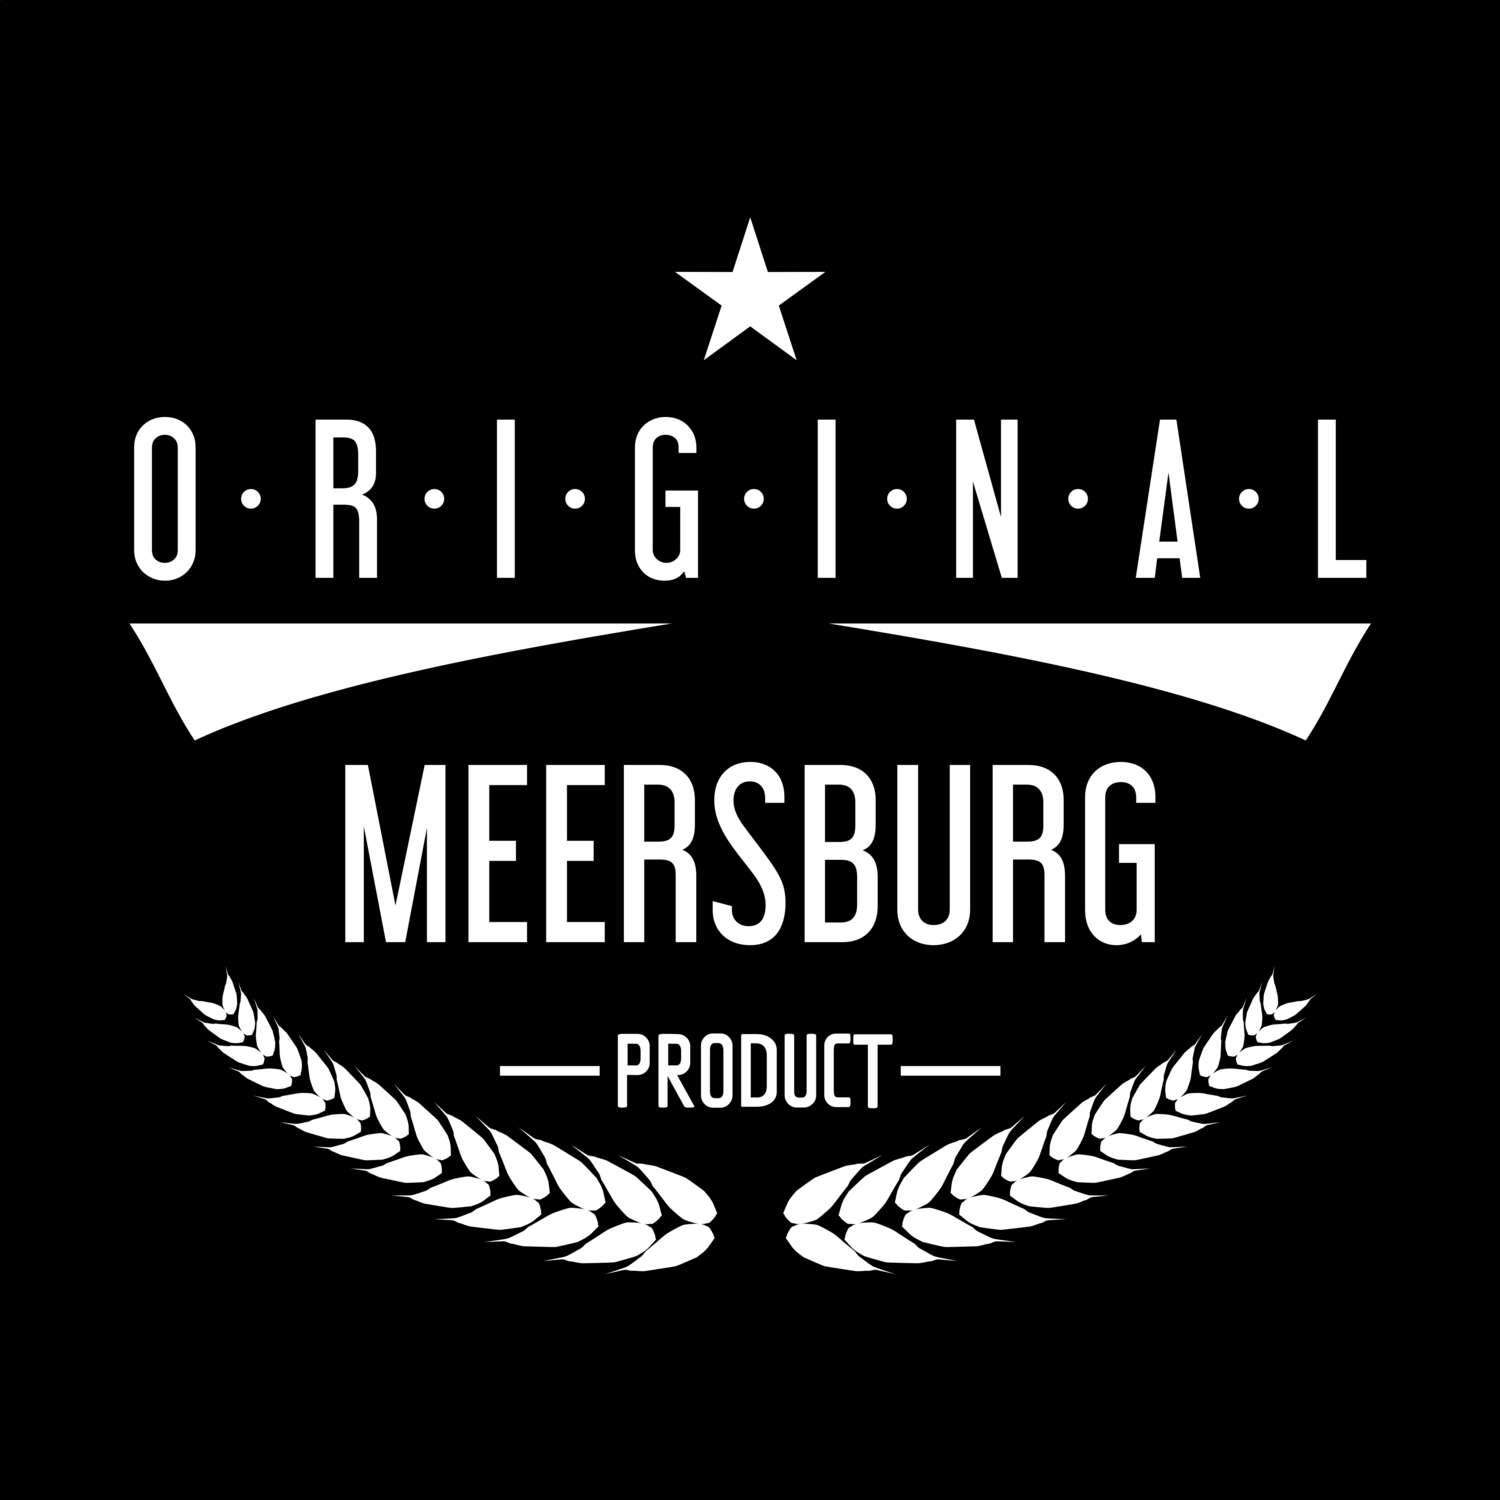 Meersburg T-Shirt »Original Product«